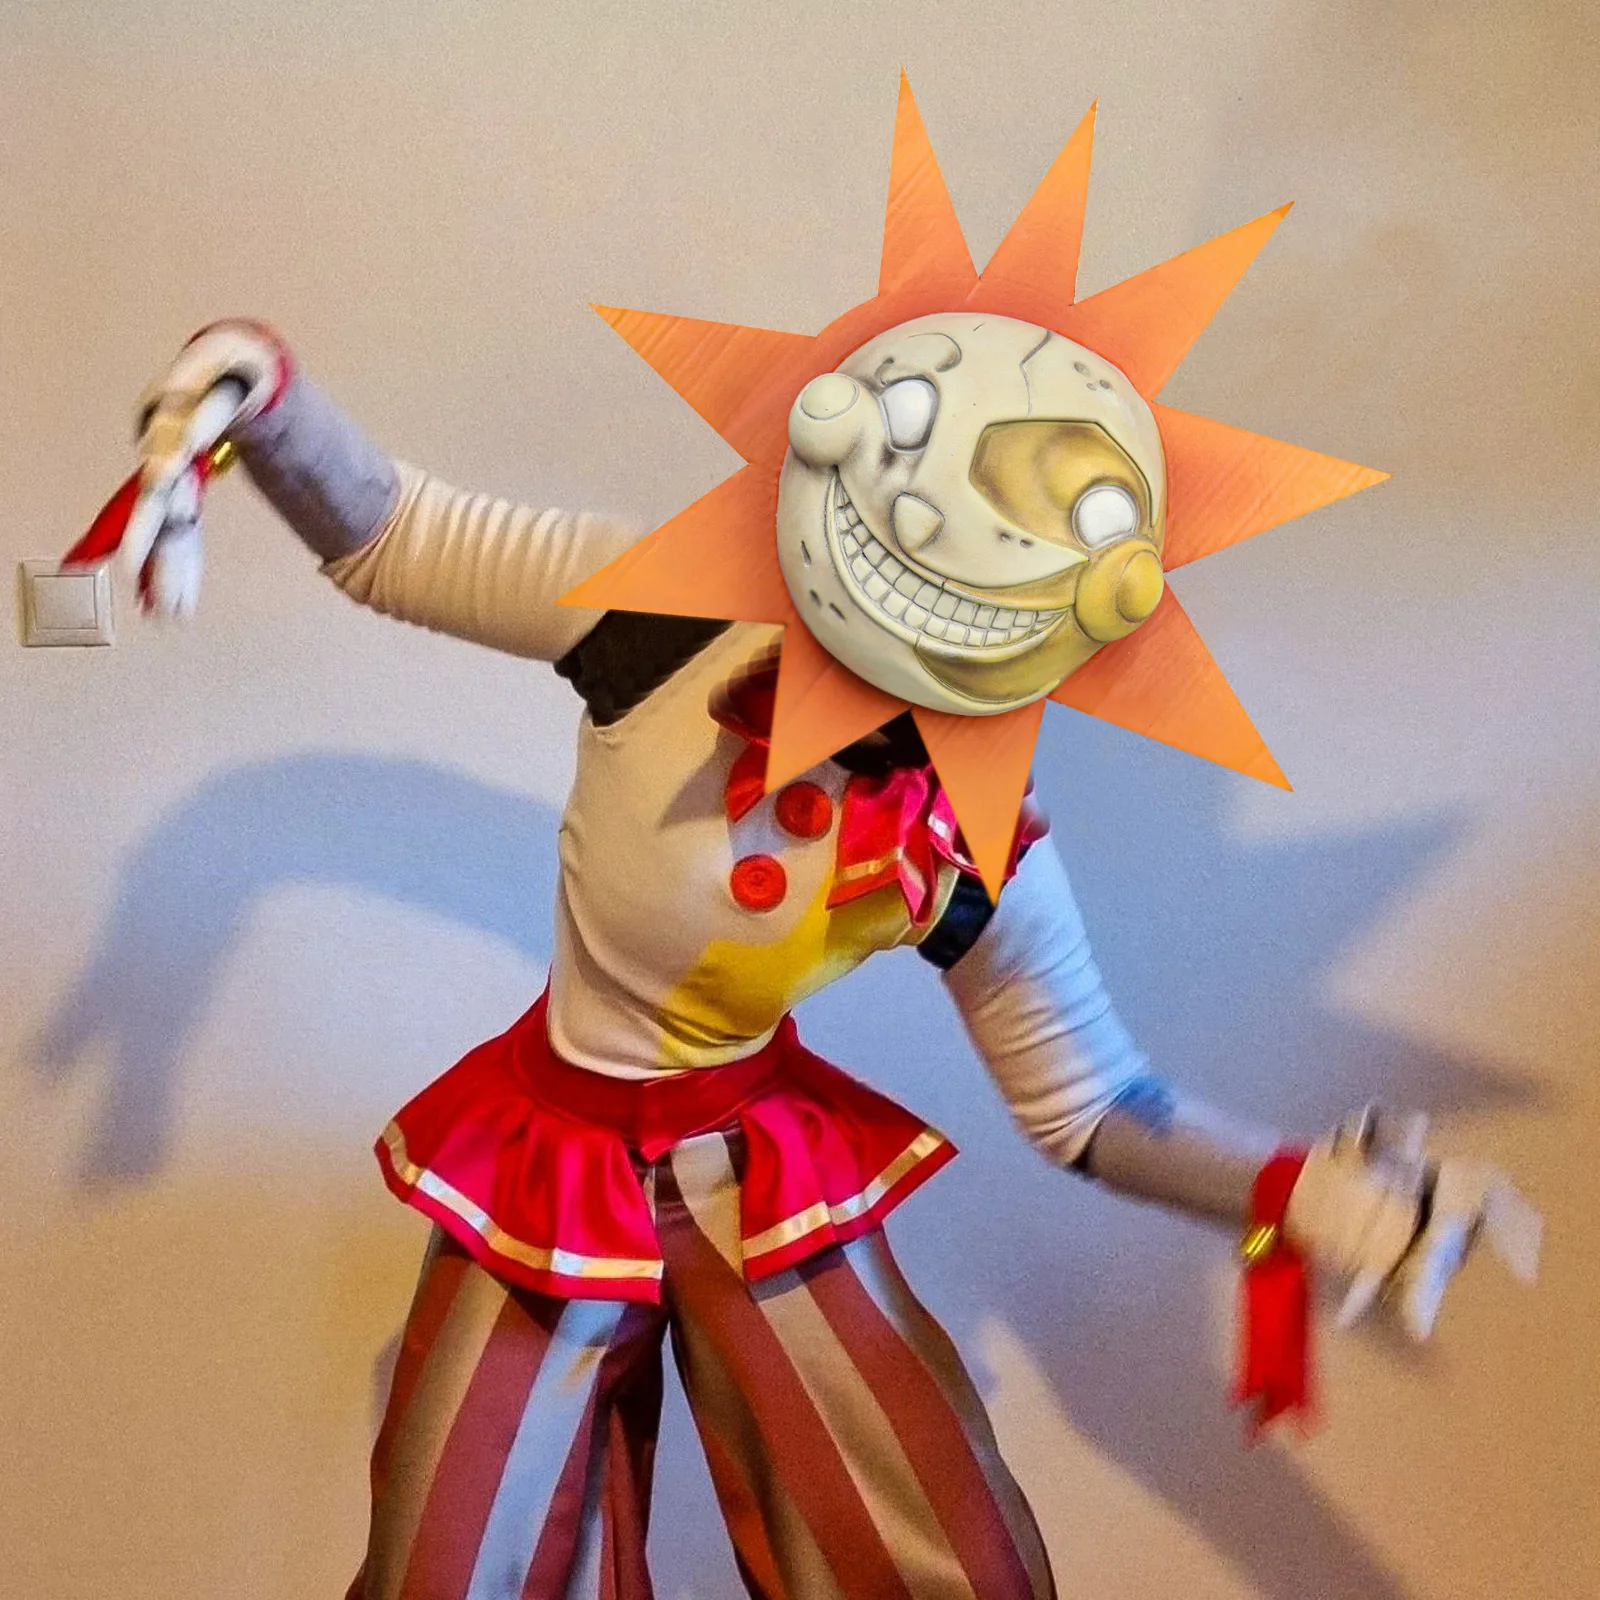 

Sun Mask Security Breach Cosplay Prop Halloween Party Costume Prop